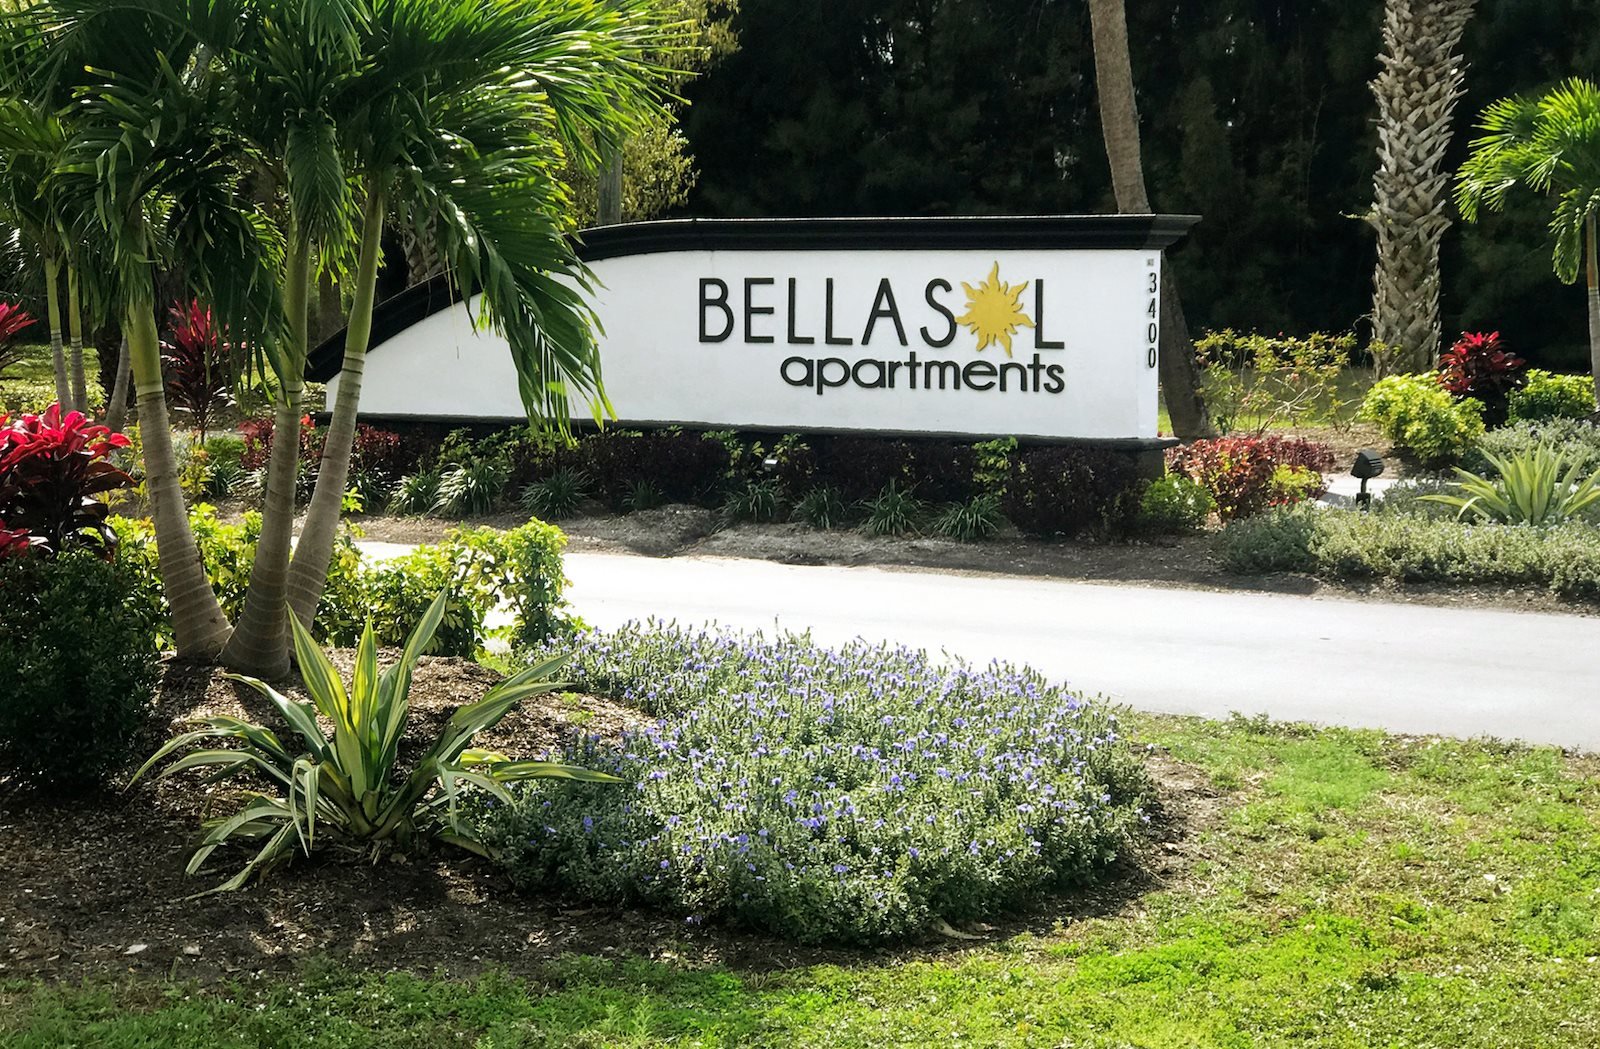 Bellasol Apartments Apartments In Sarasota Fl